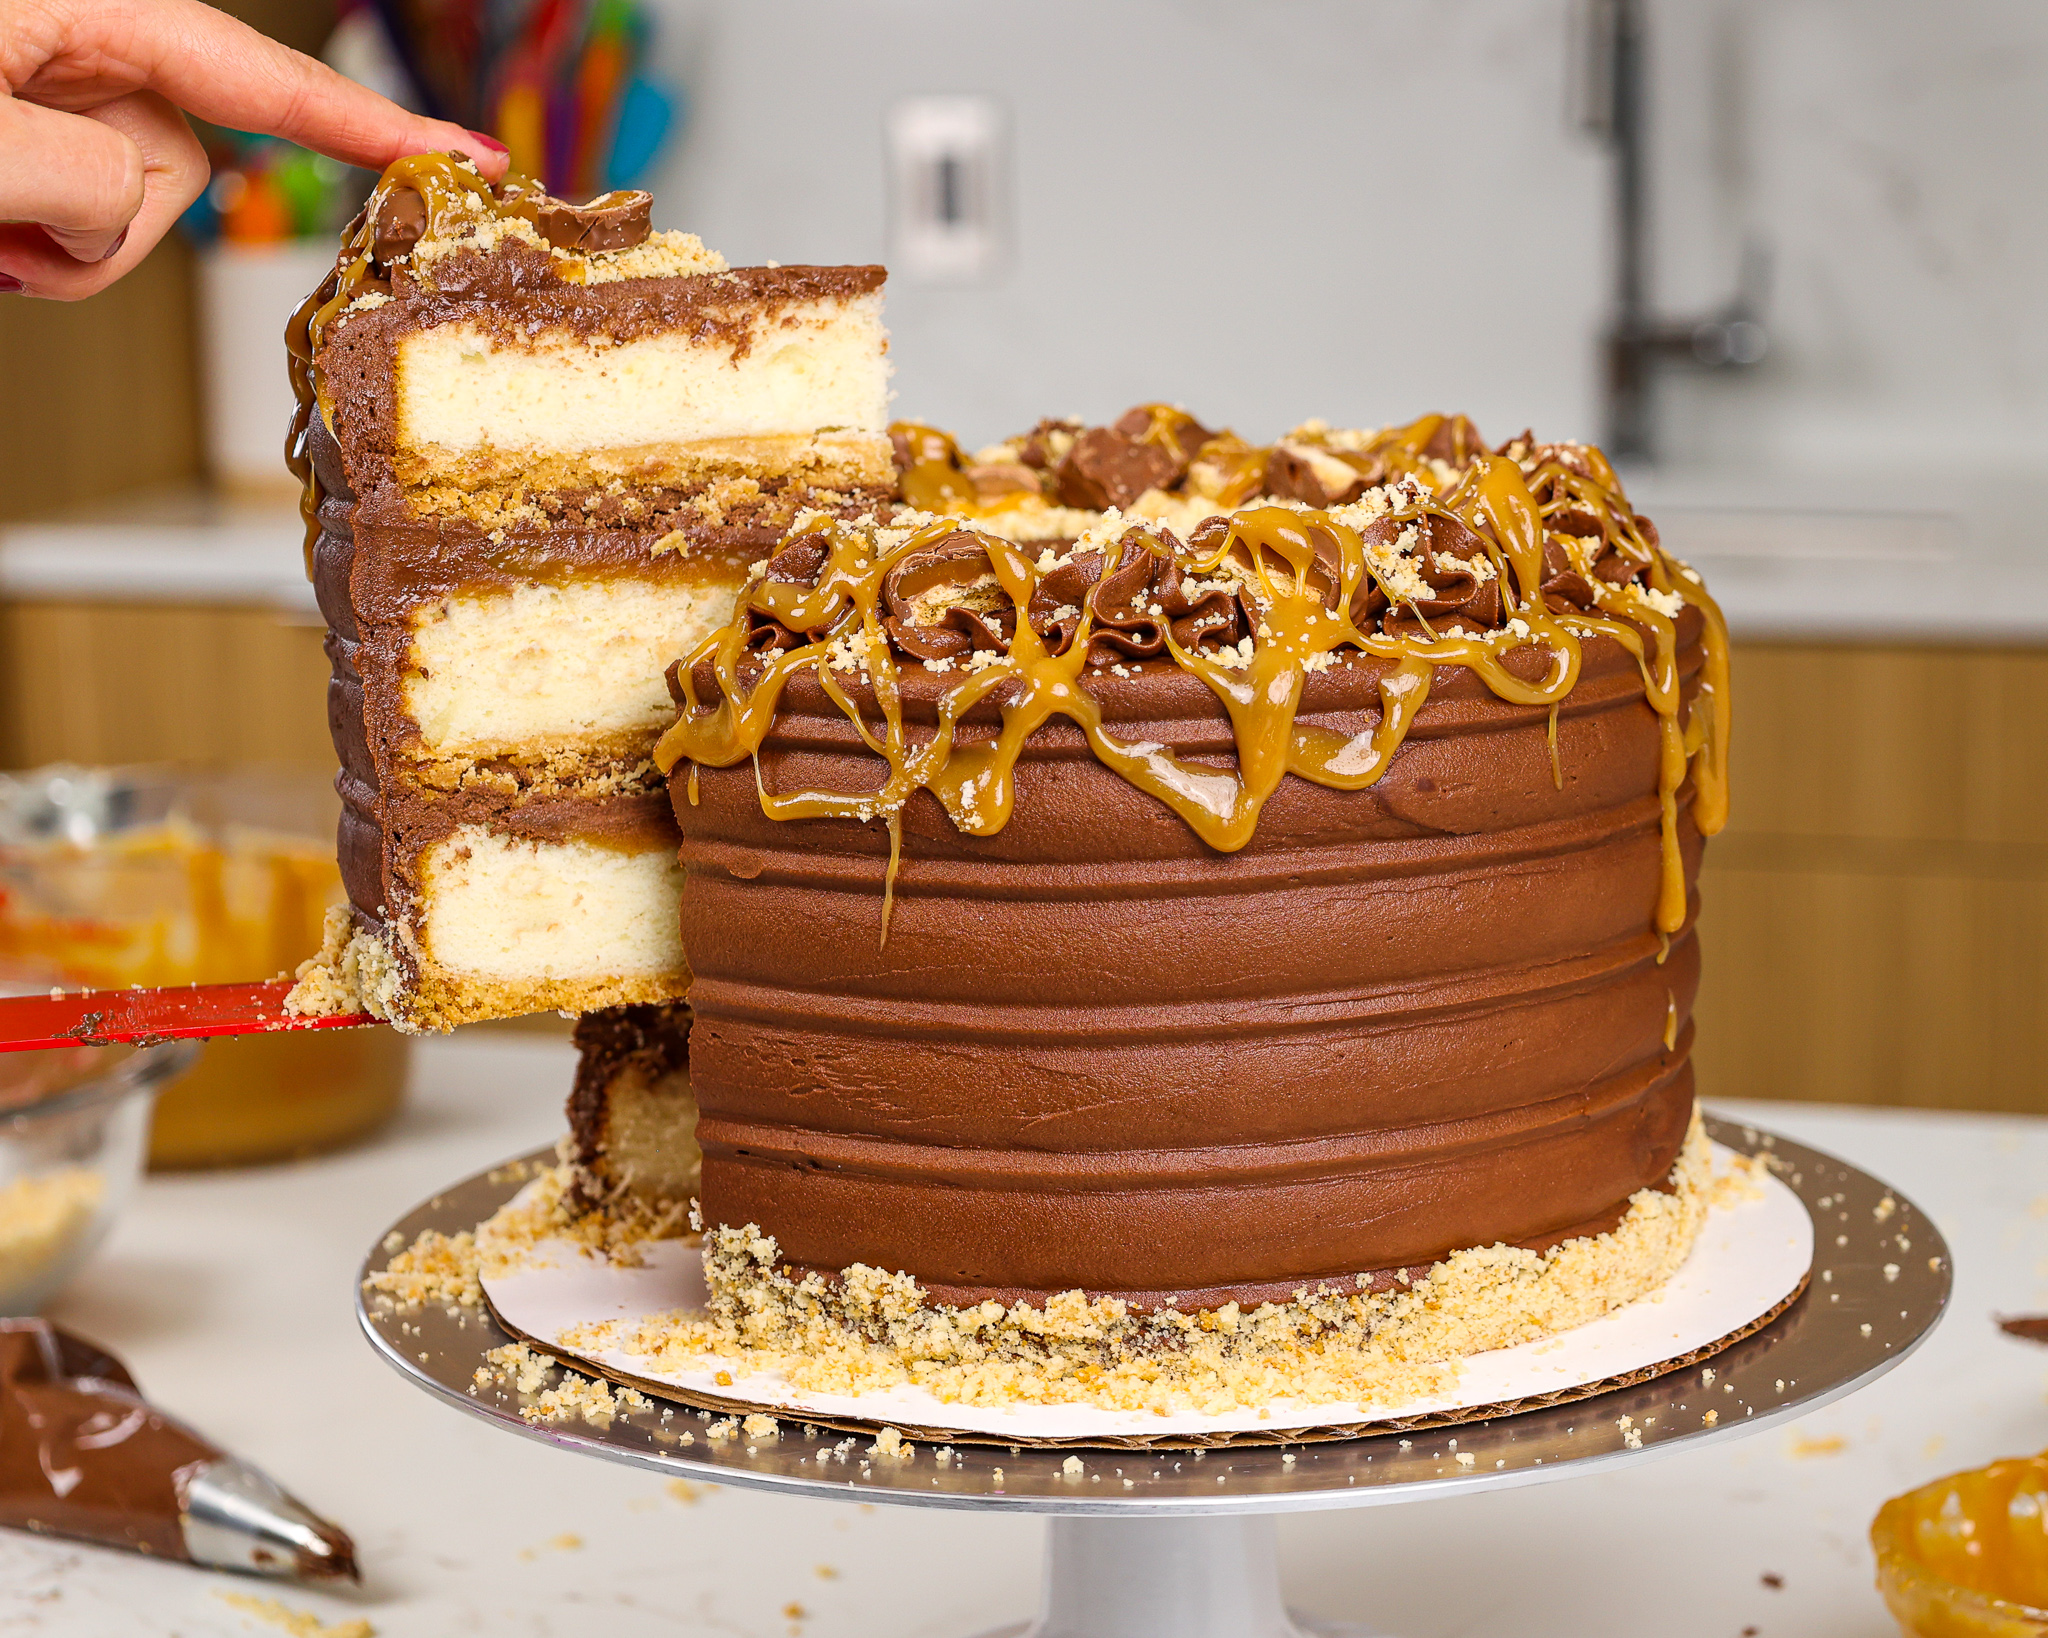 Twix Cake - Delicious Layers of Shortbread, Cake, Caramel & Chocolate